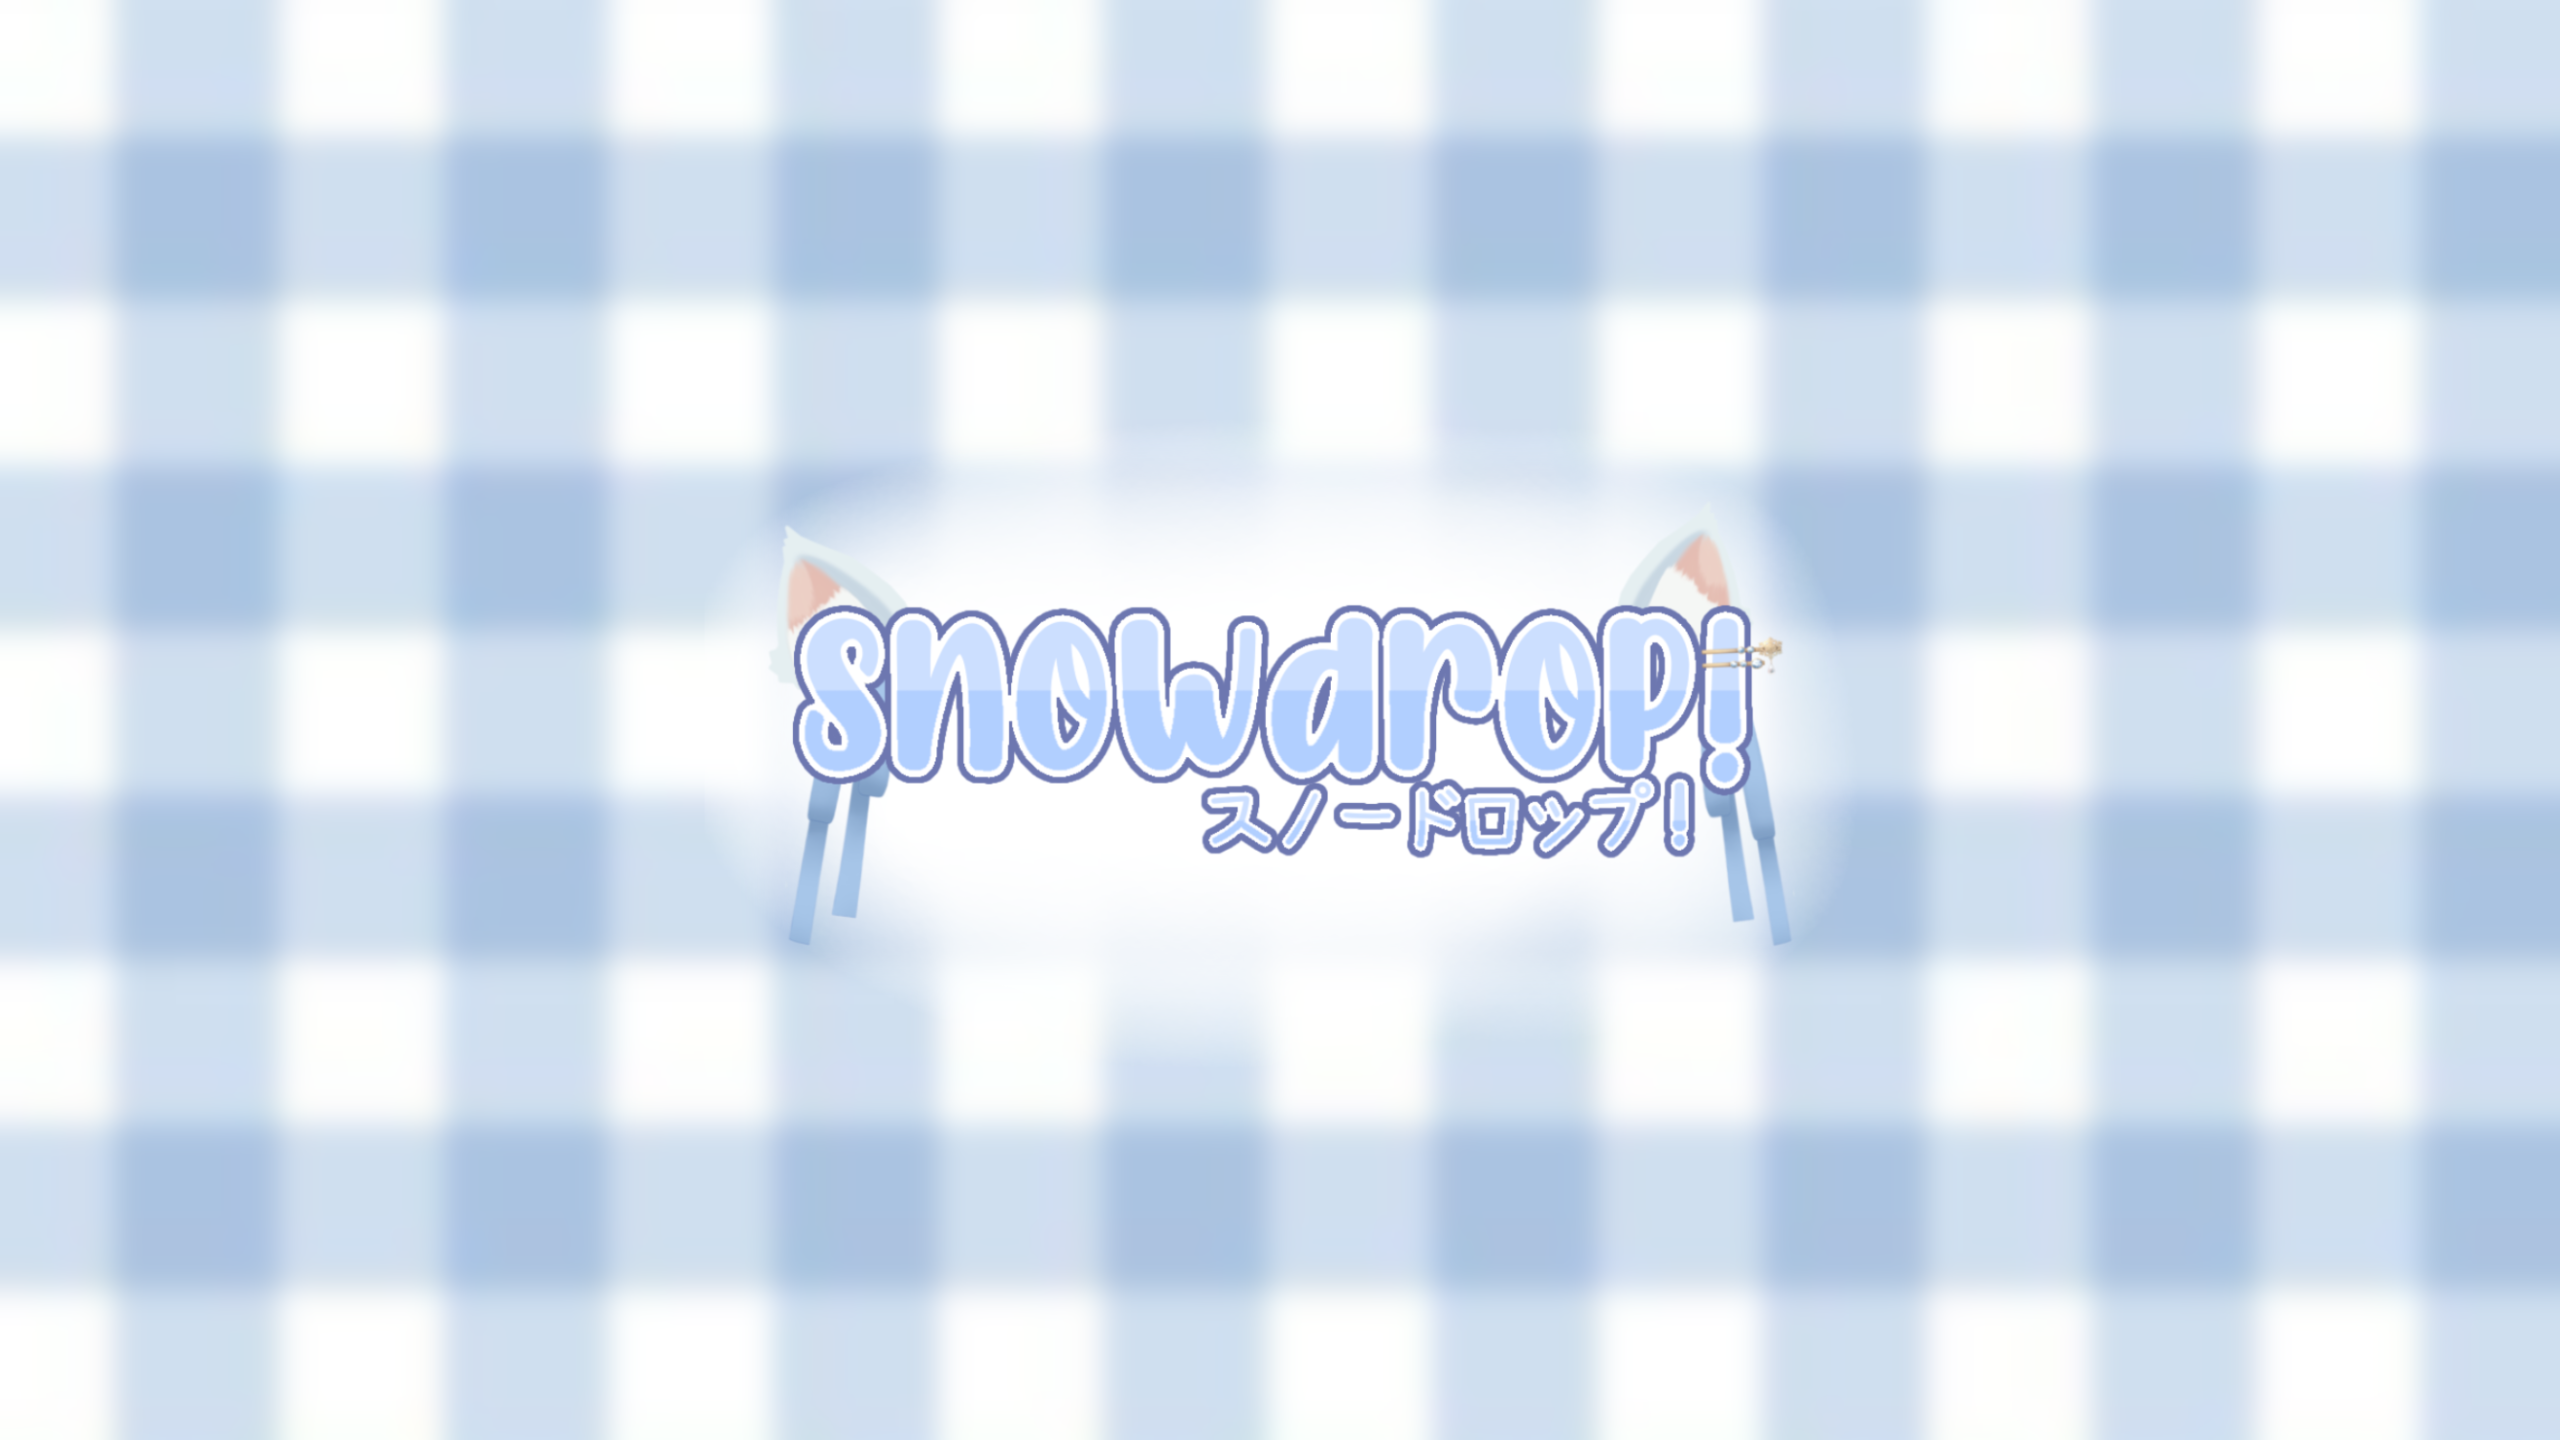 Snowdrop!